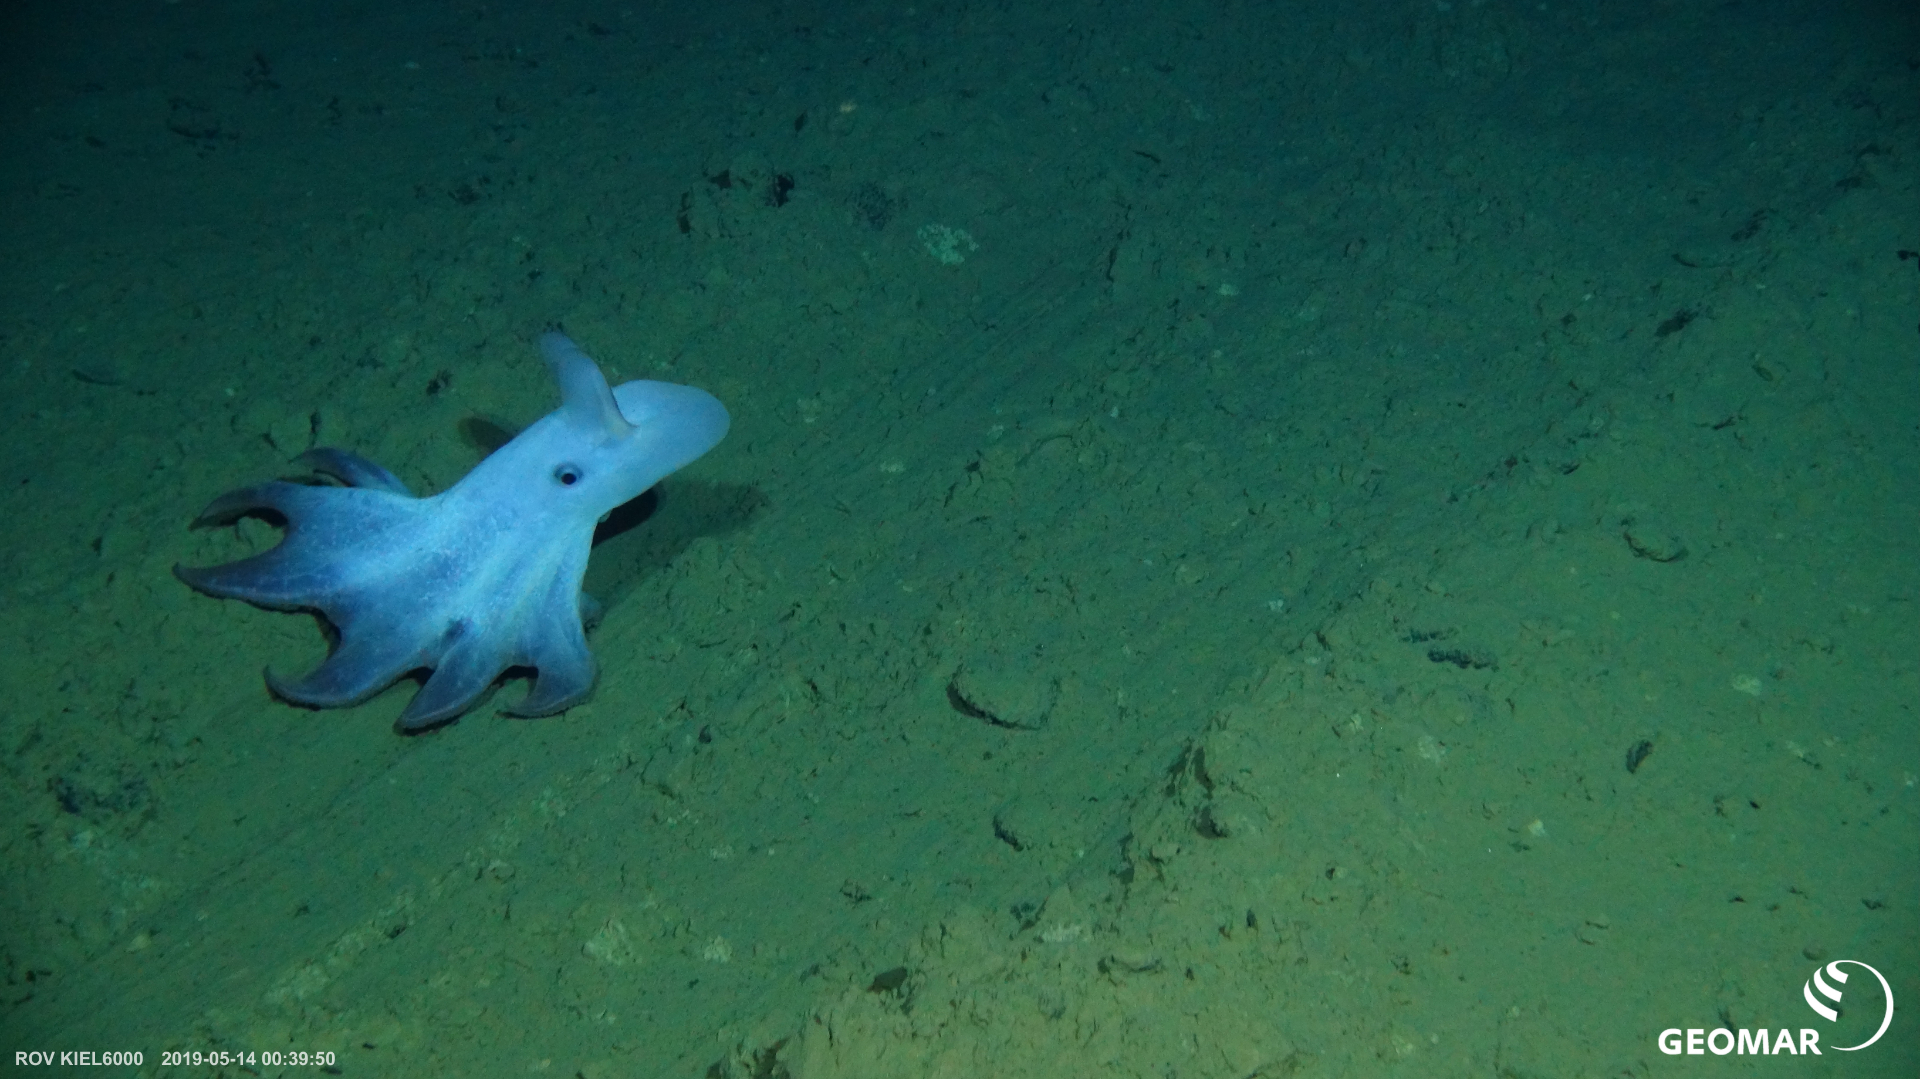 A rare deep-sea octopus caught in the headlights of ROV Kiel 6000. Photo: ROV Kiel 6000, GEOMAR.